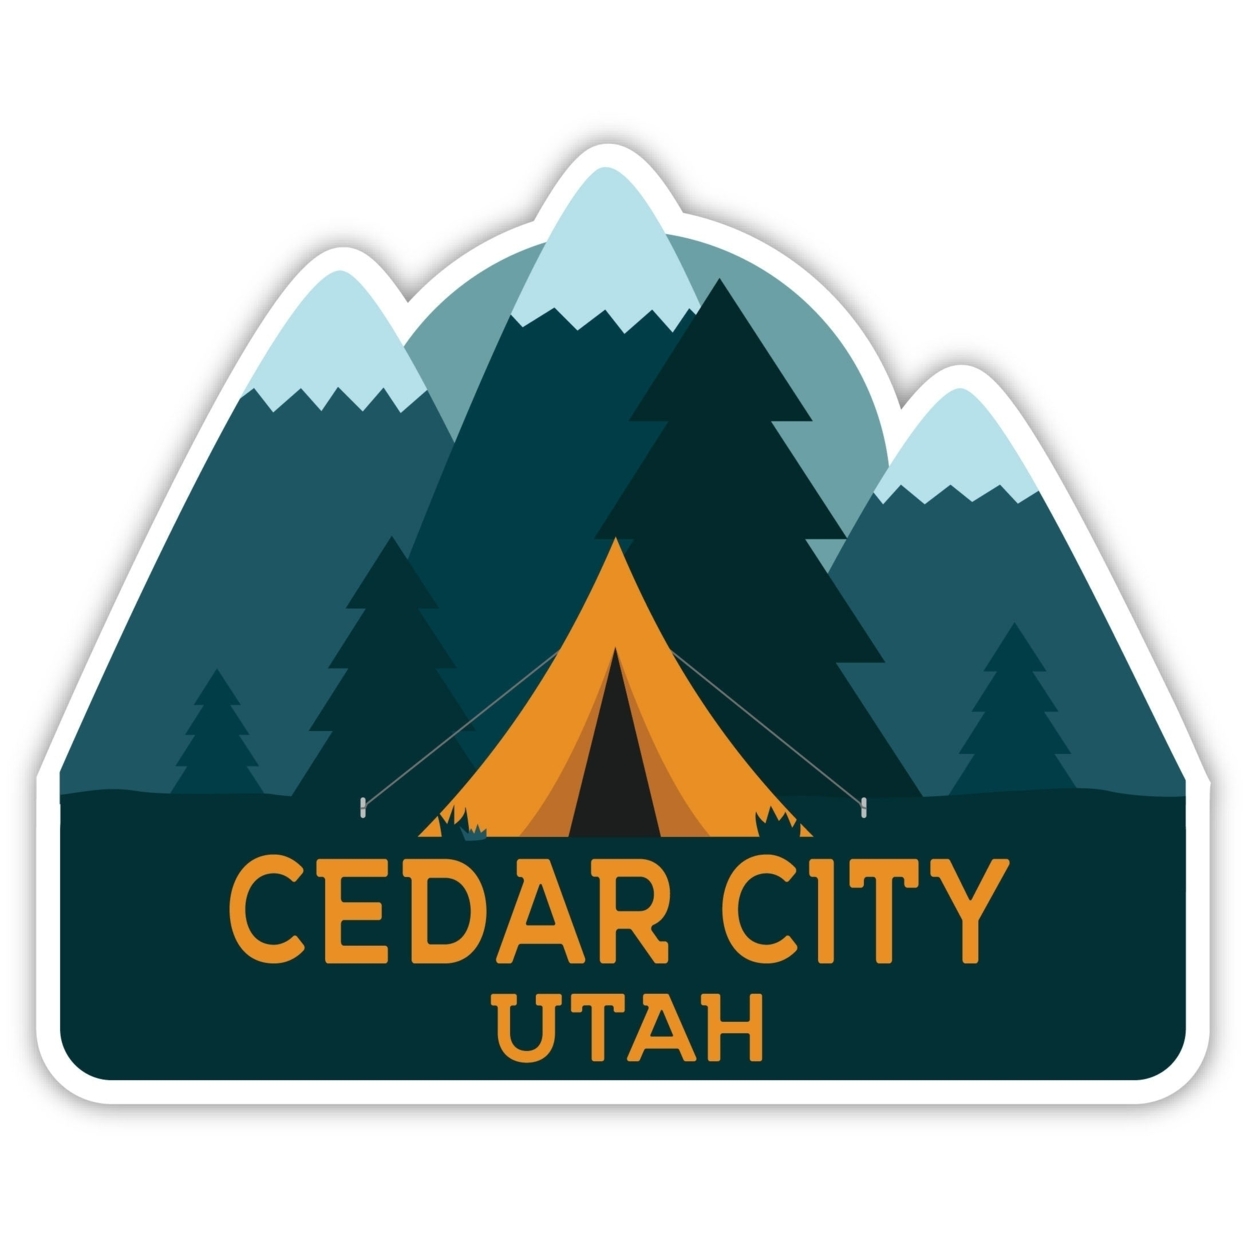 Cedar City Utah Souvenir Decorative Stickers (Choose Theme And Size) - Single Unit, 4-Inch, Camp Life